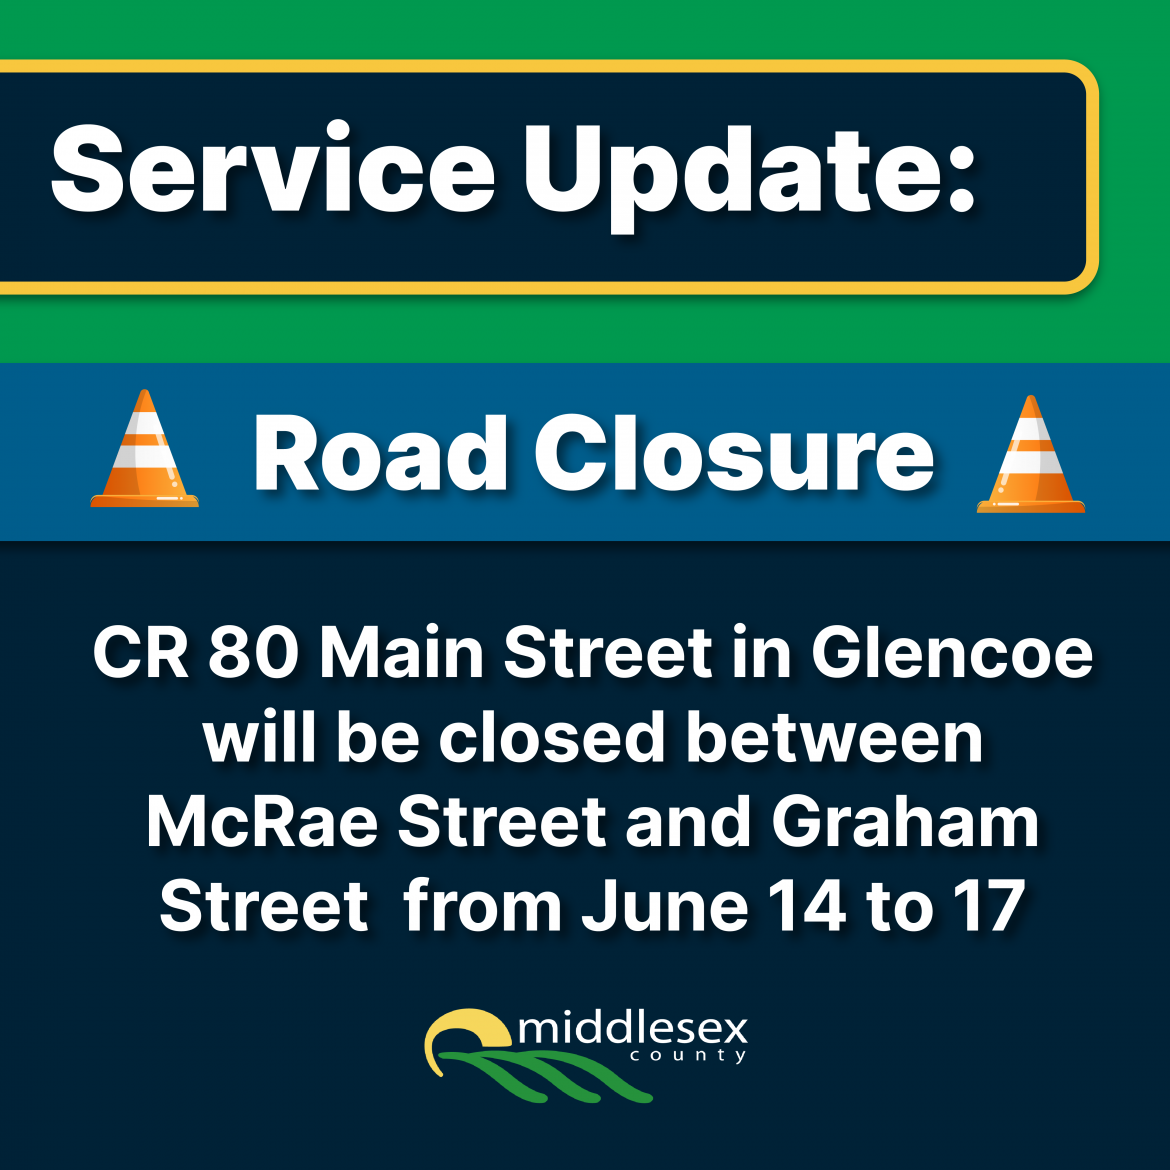 Road Closure of CR 80 Main Street in Glencoe 